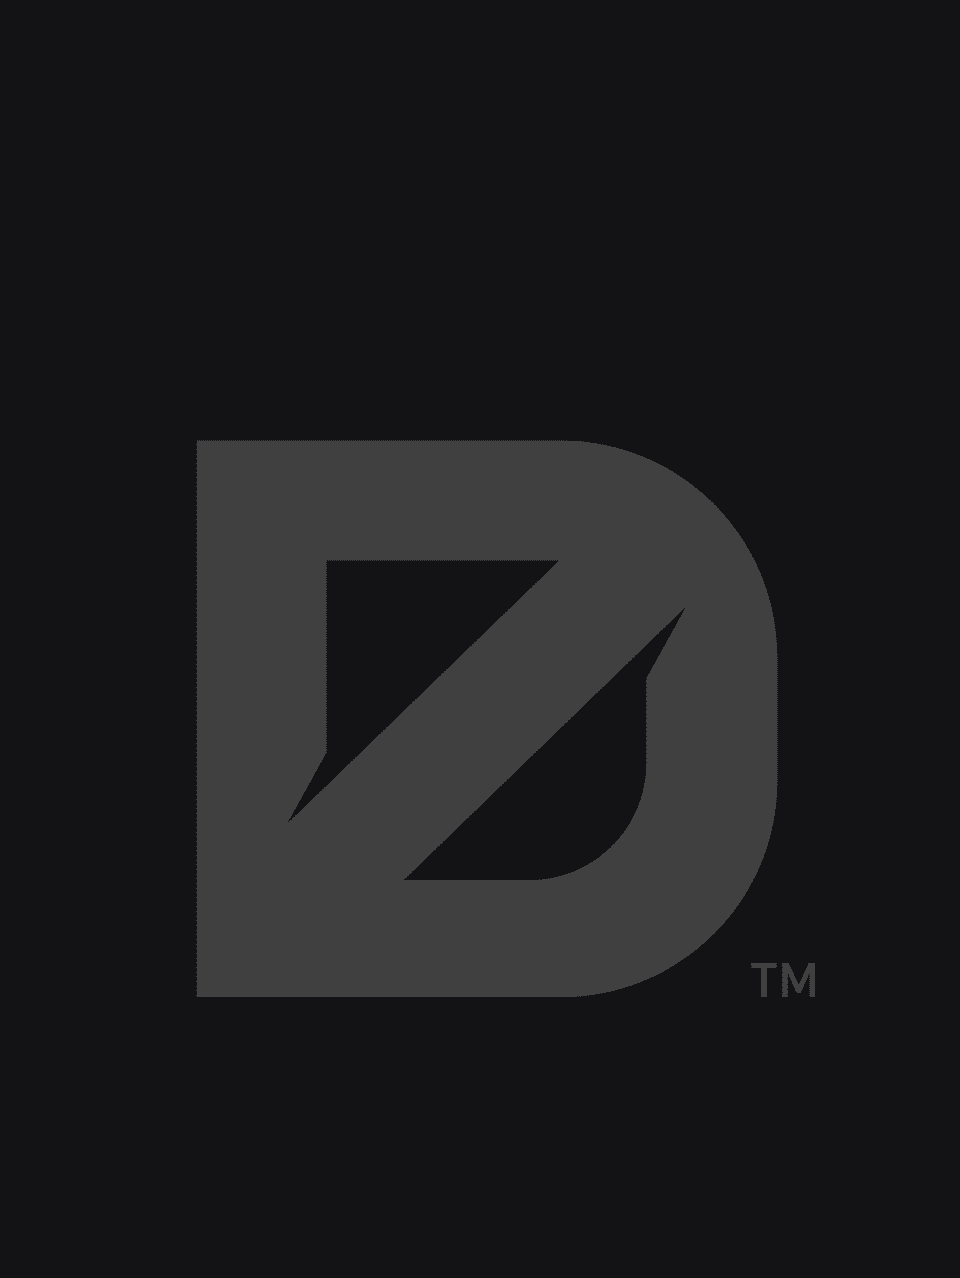 Deleta Zero logo